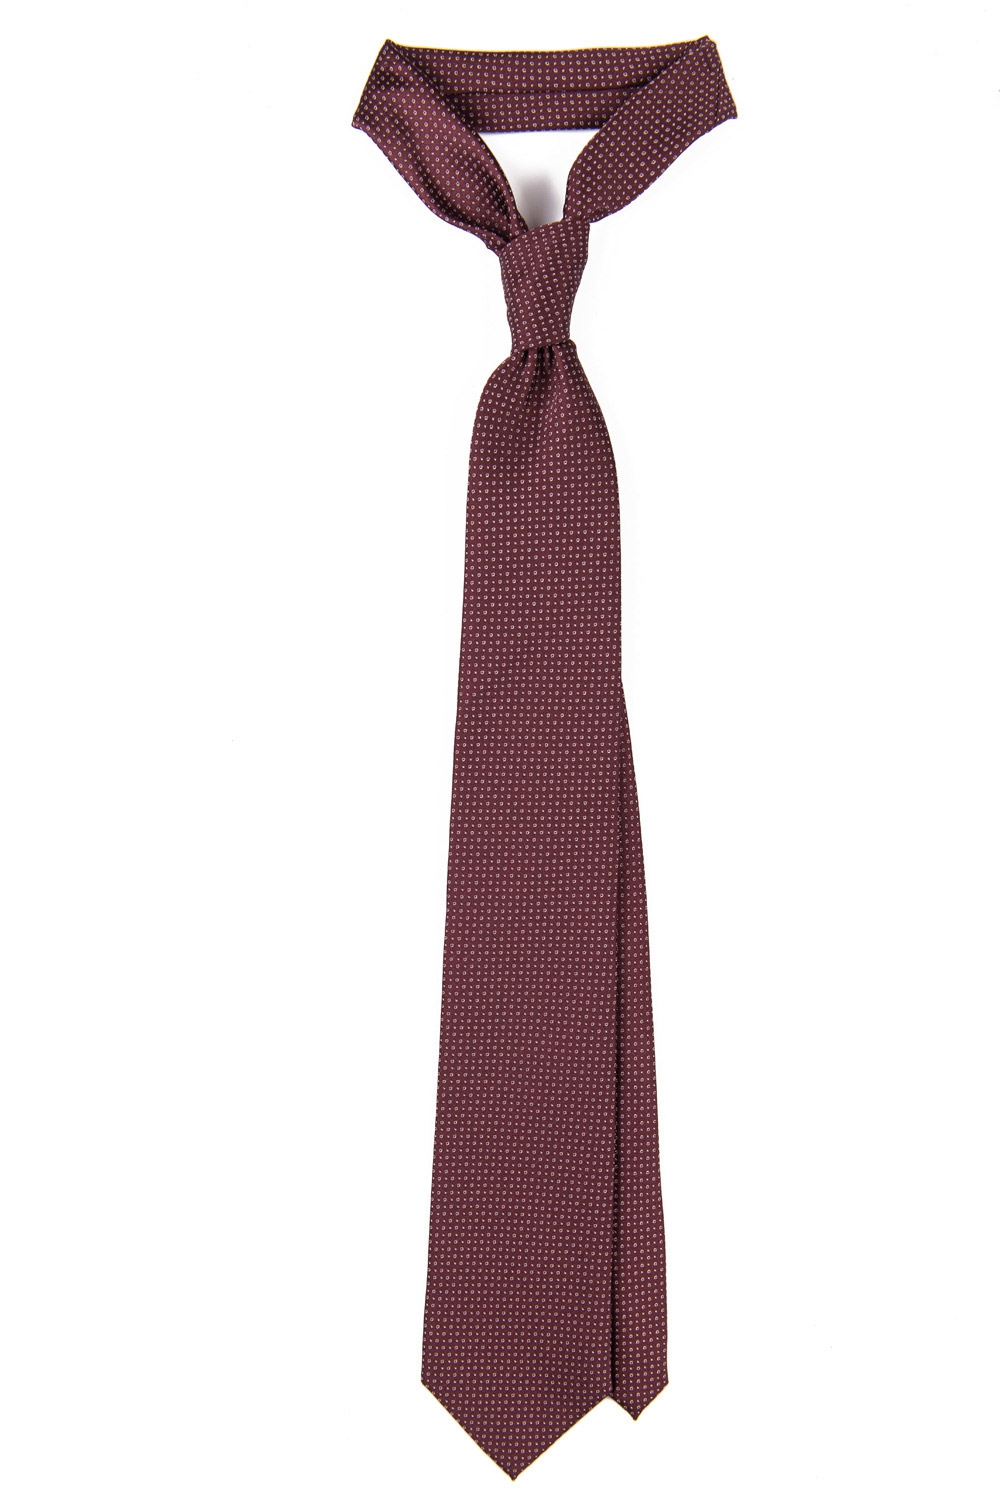 Cravata poliester grena print geoemtric 0